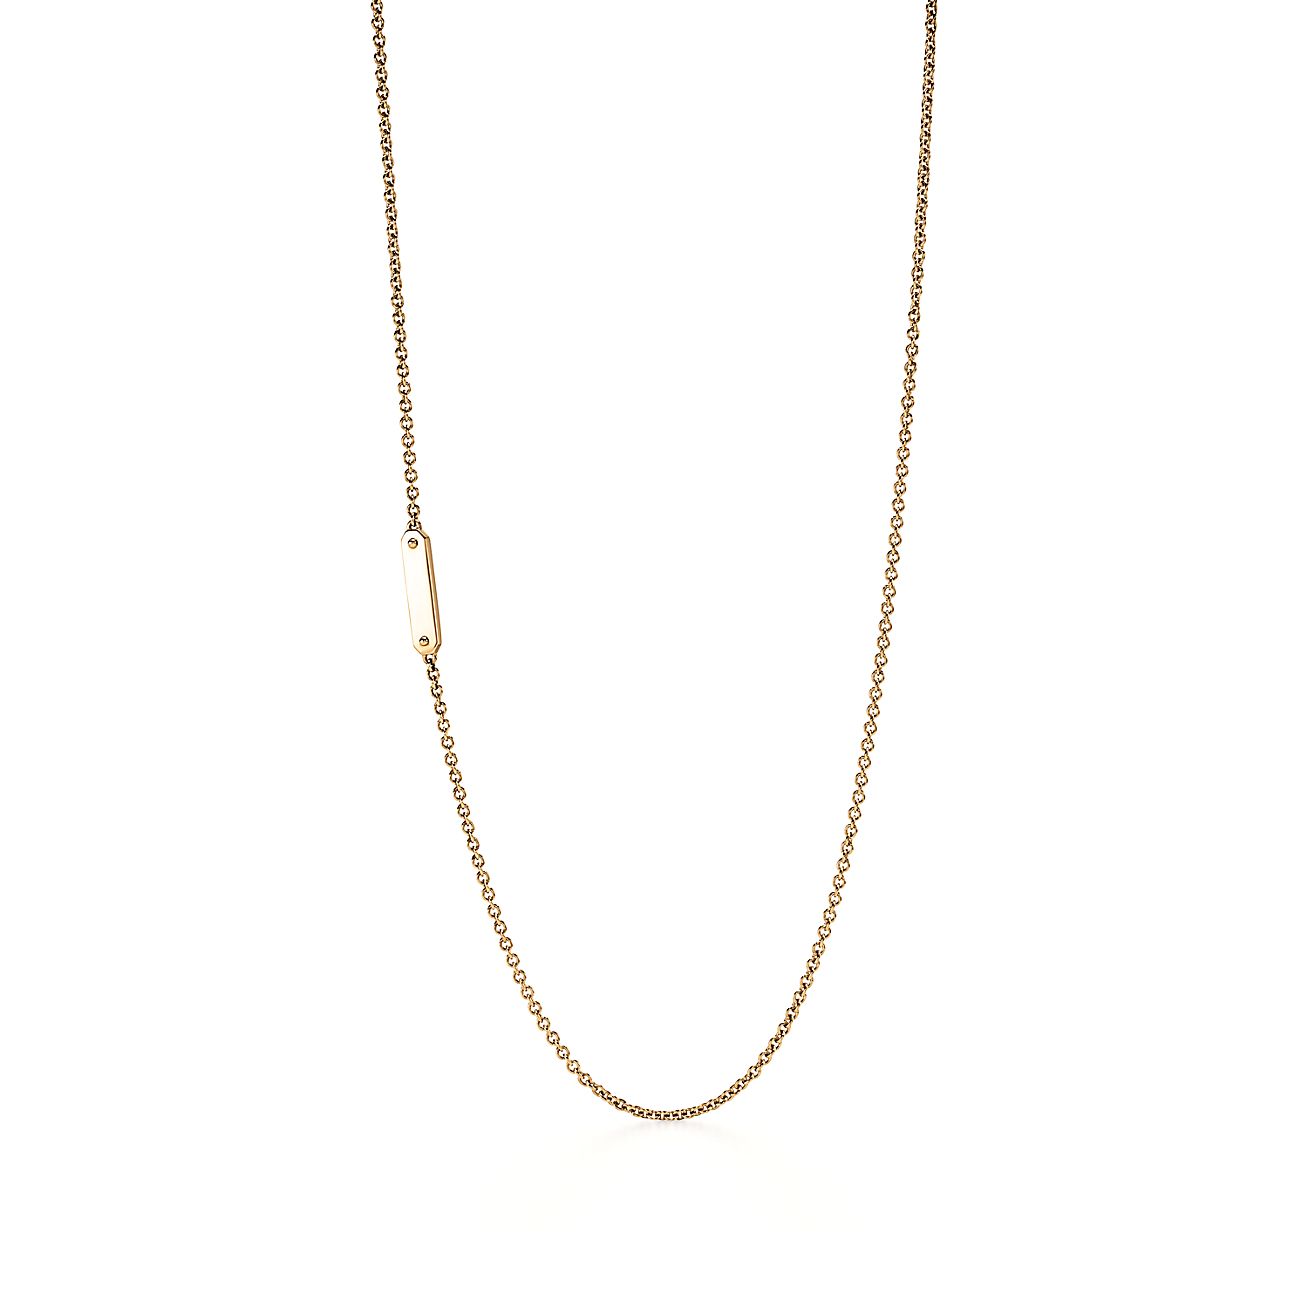 Tag chain necklace in 18k gold, mini 